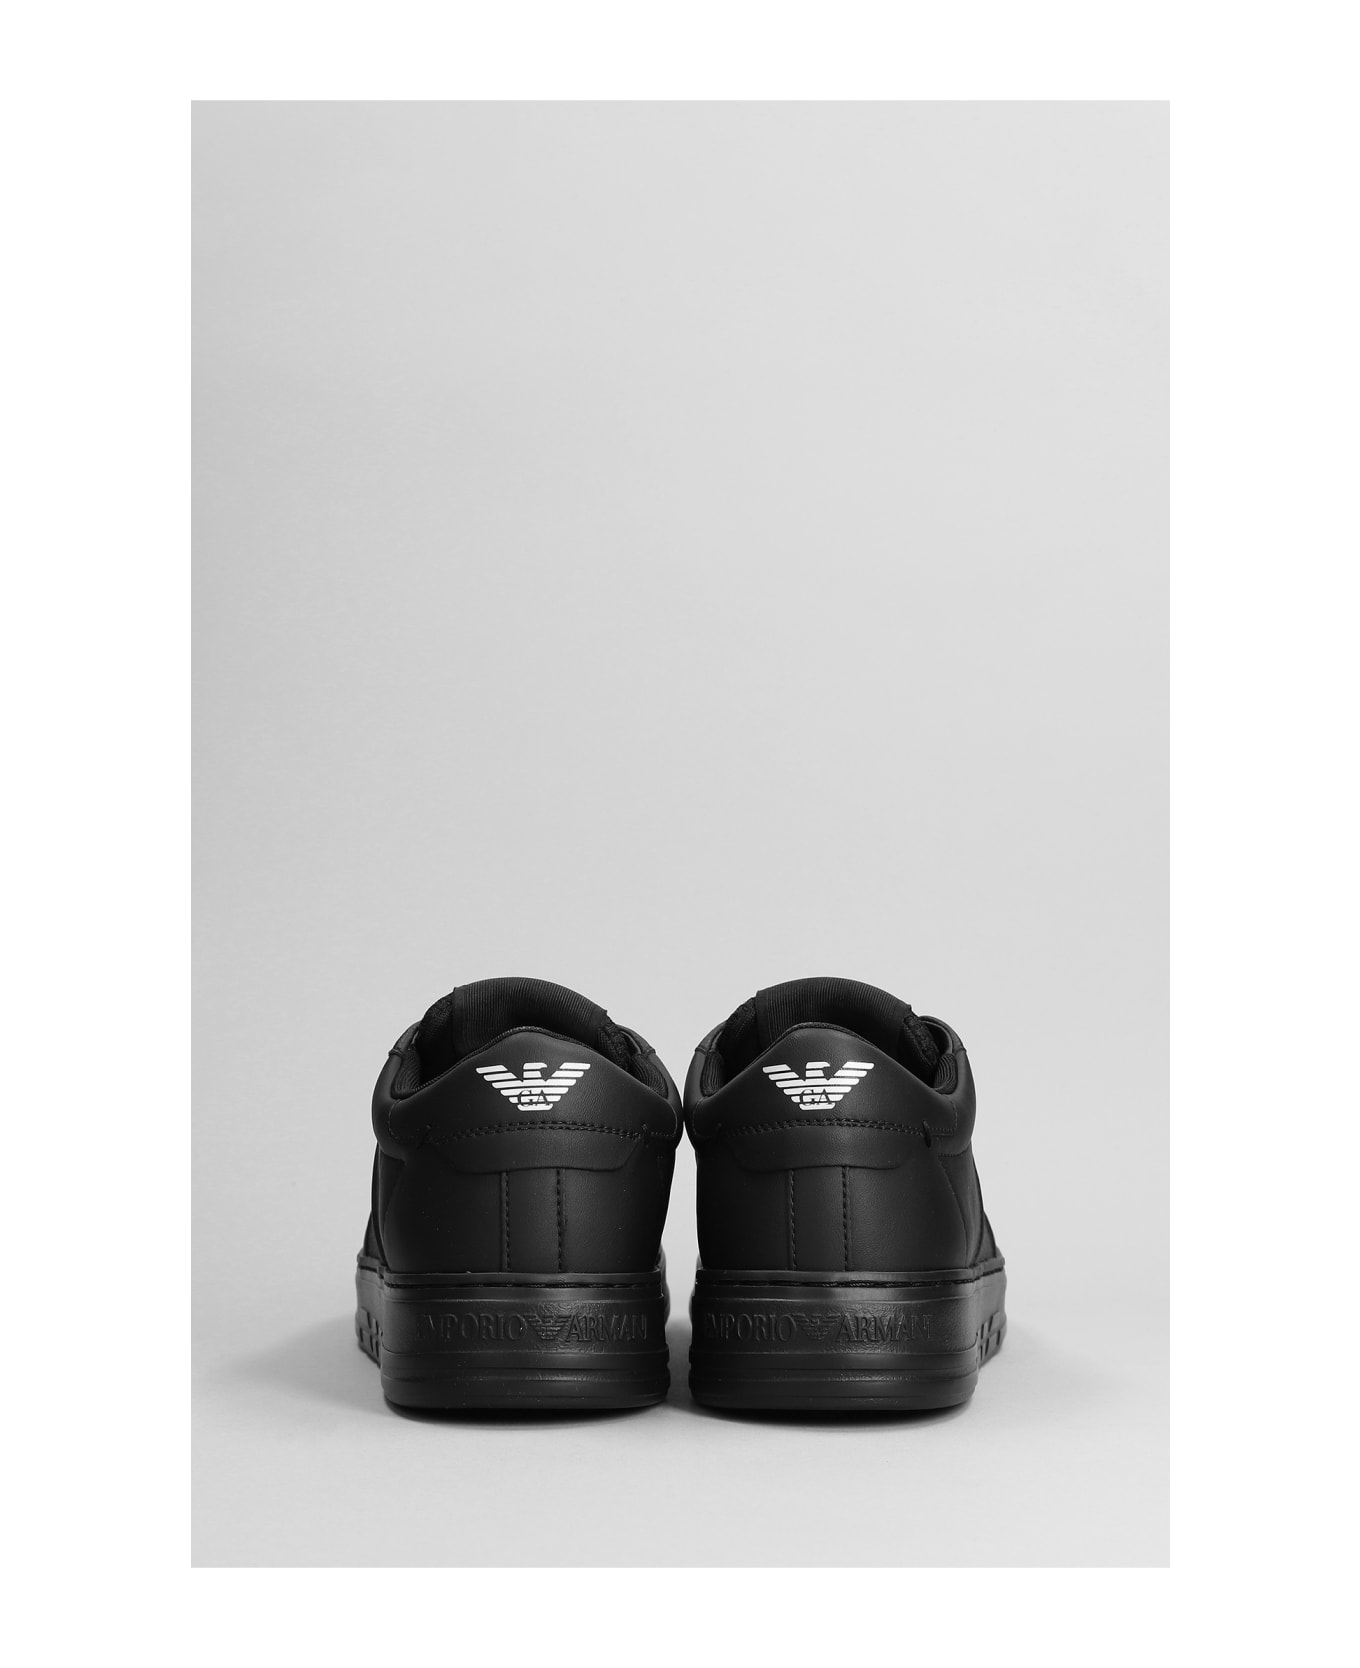 Emporio Armani Sneakers In Black Leather - Black スニーカー